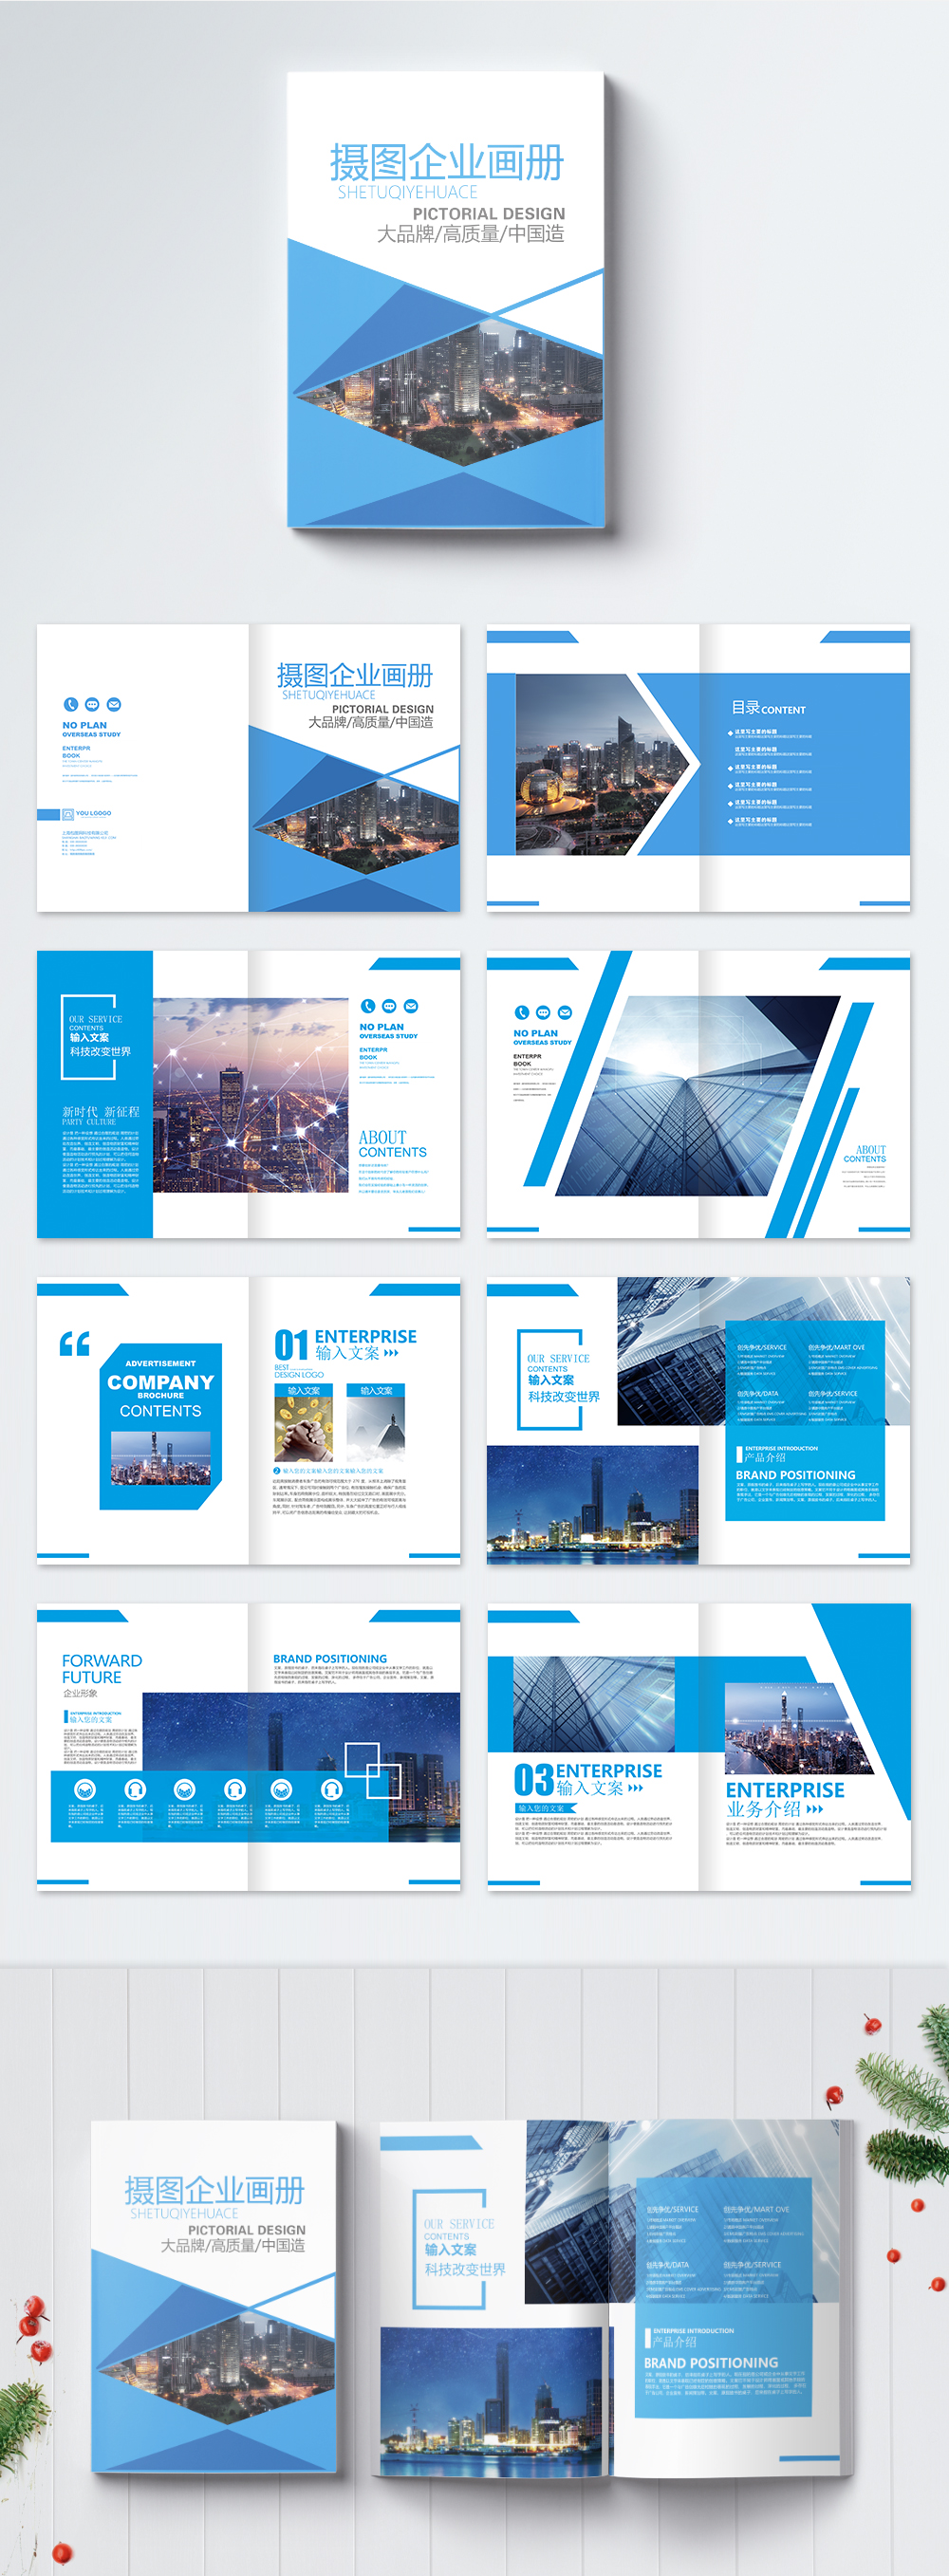 Blue atmosphere enterprise brochure template image_picture free ...